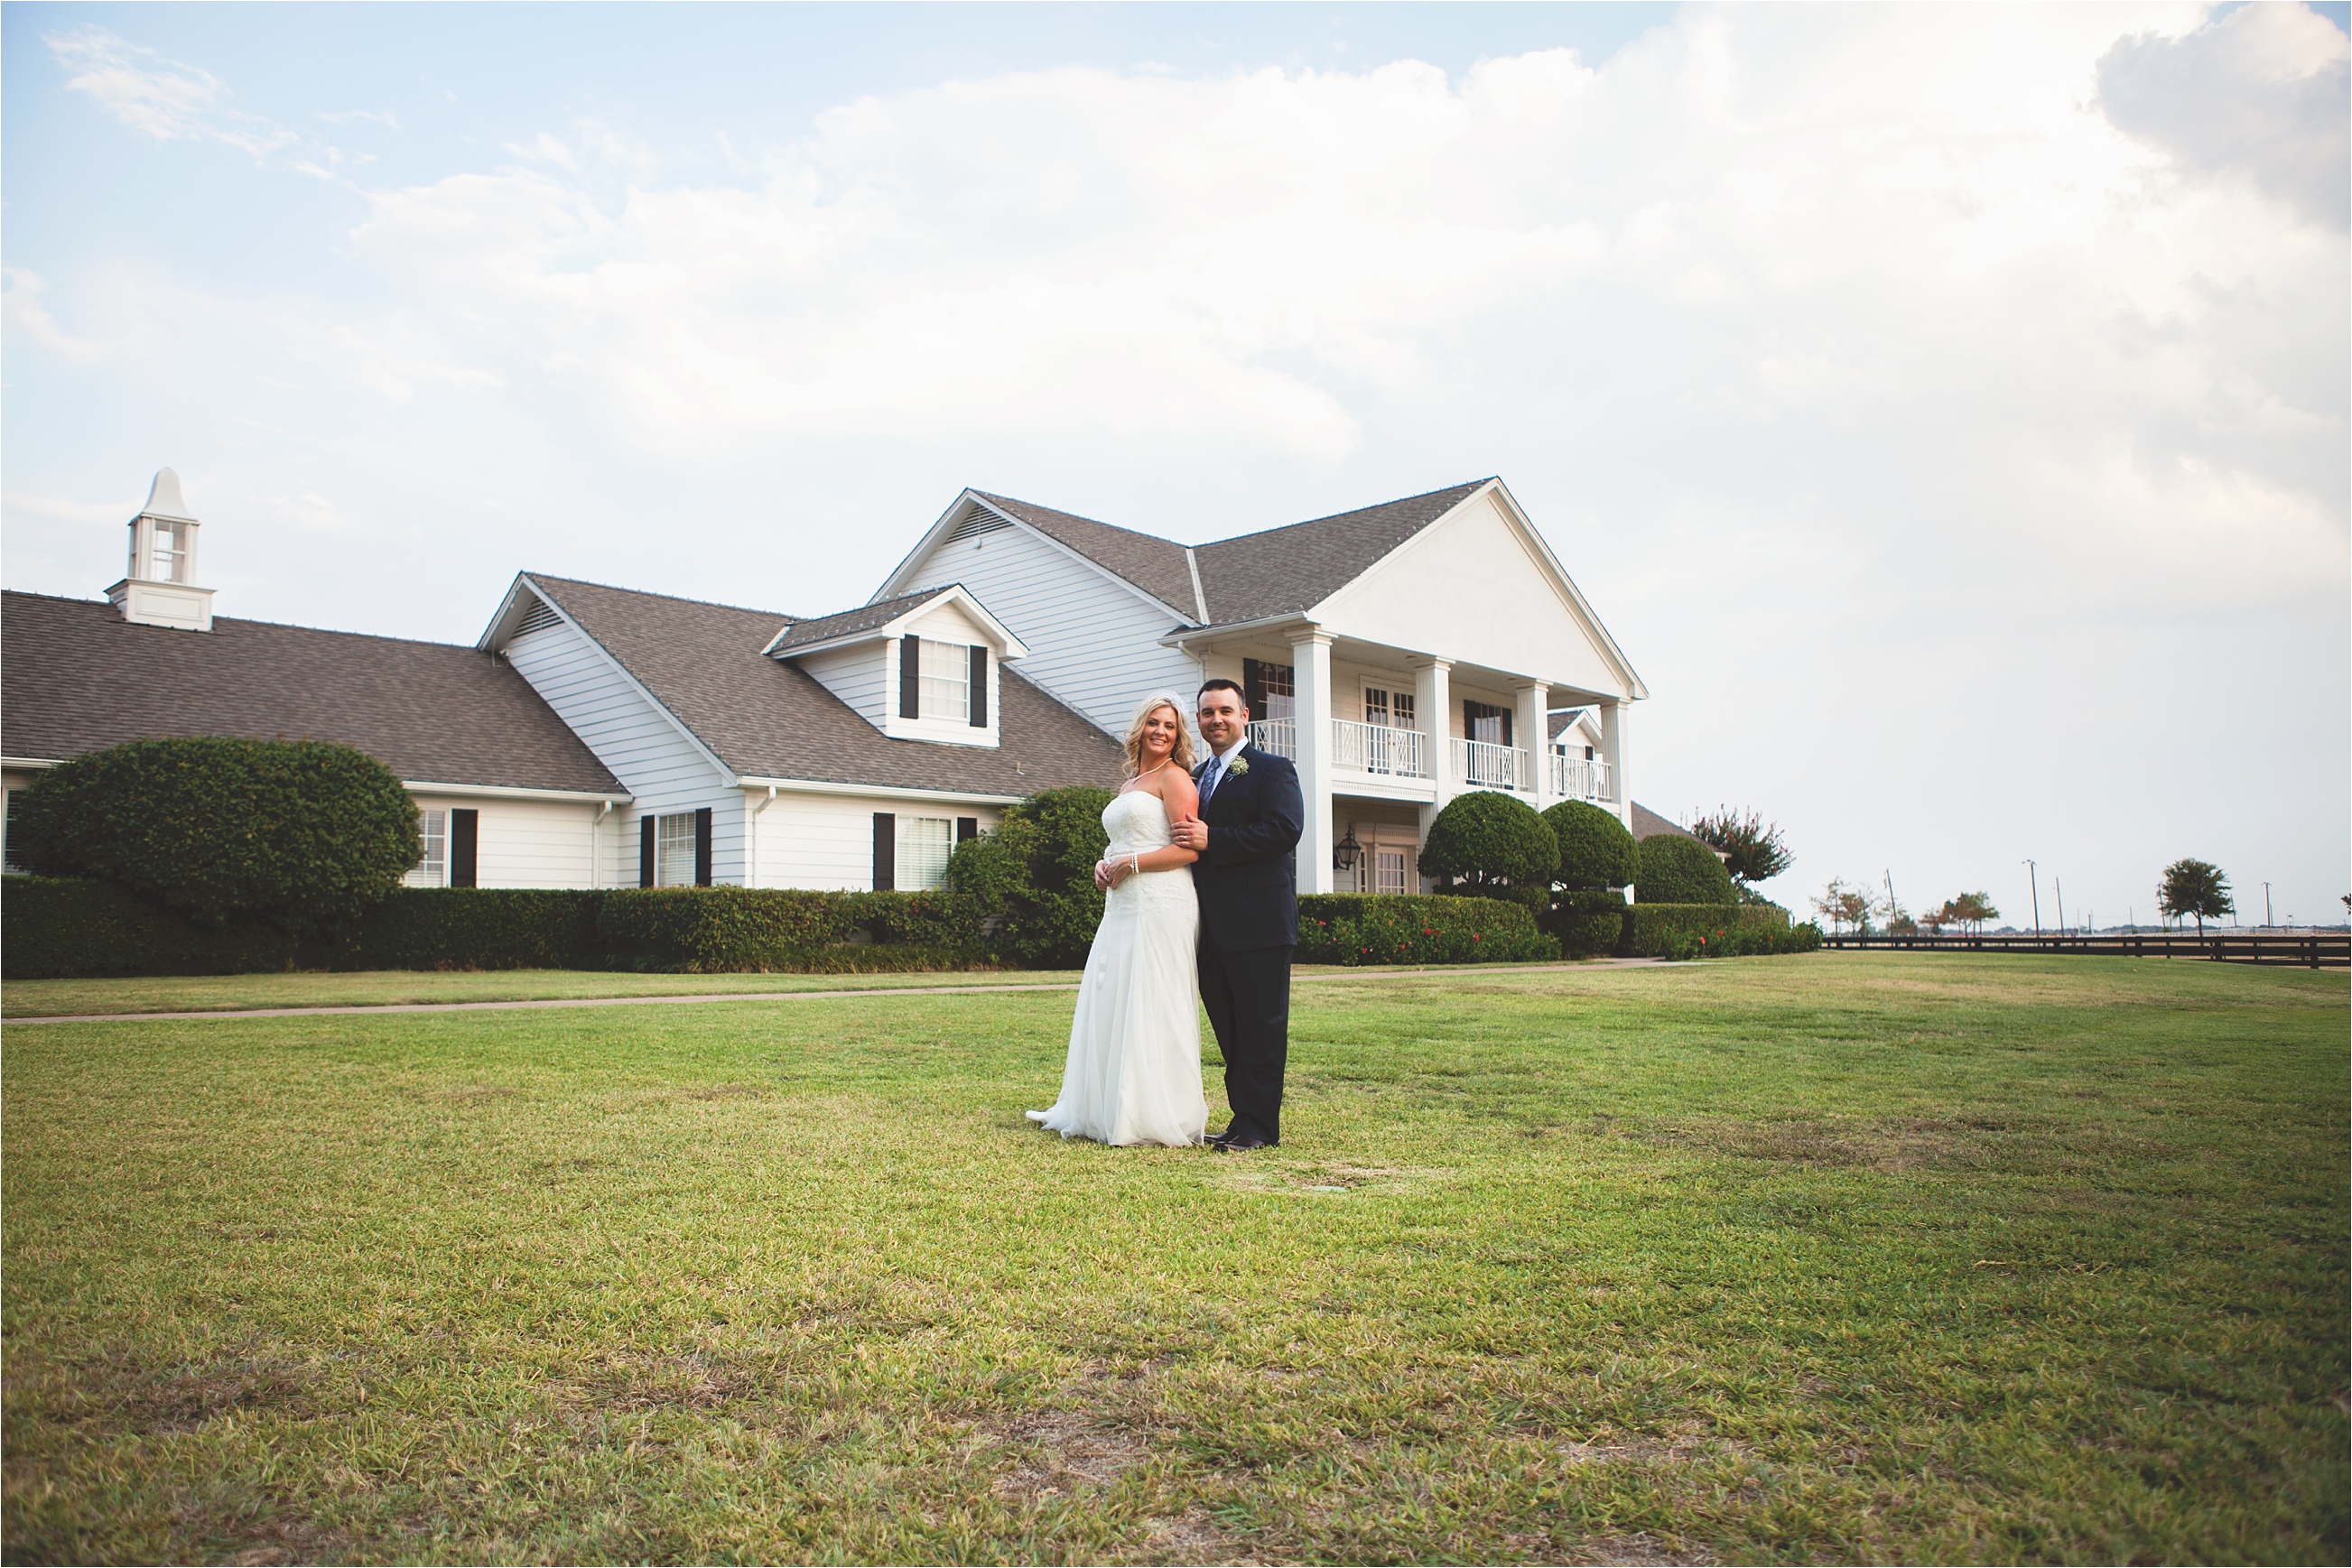 Kristy & Michael :: Southfork Ranch :: Dallas Wedding Photographer ...